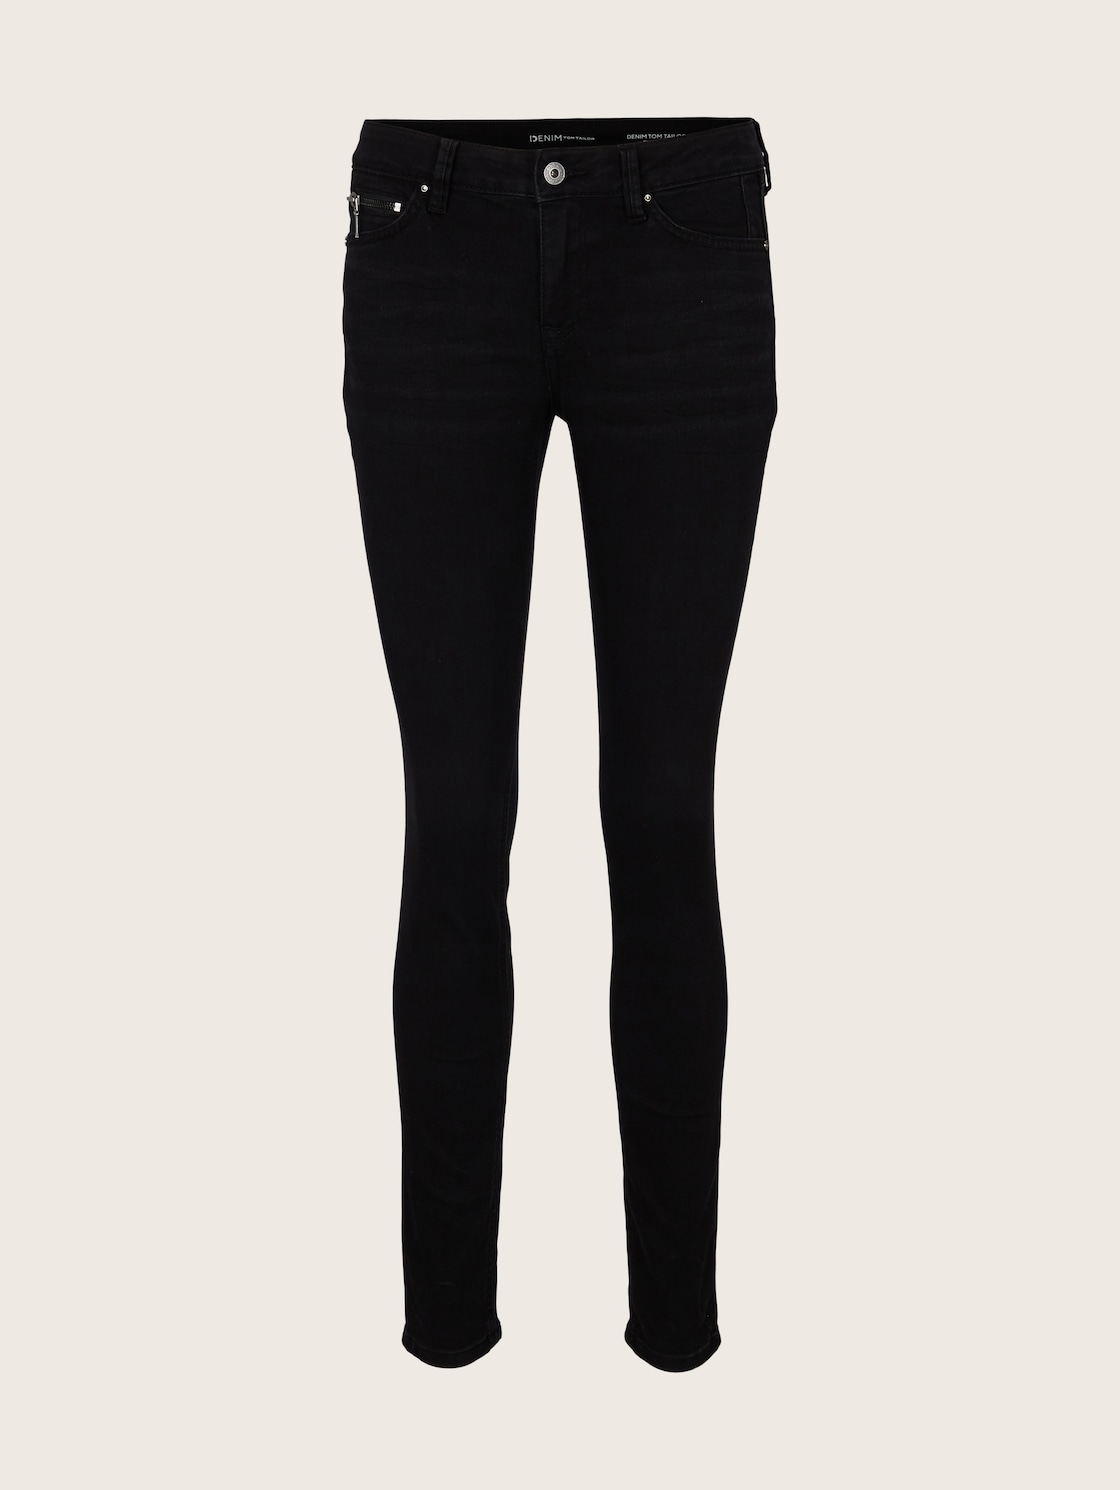 TOM TAILOR DENIM Damen Jona Extra Skinny Jeans mit recyceltem Polyester, schwarz, Uni, Gr. 25/30 von Tom Tailor Denim